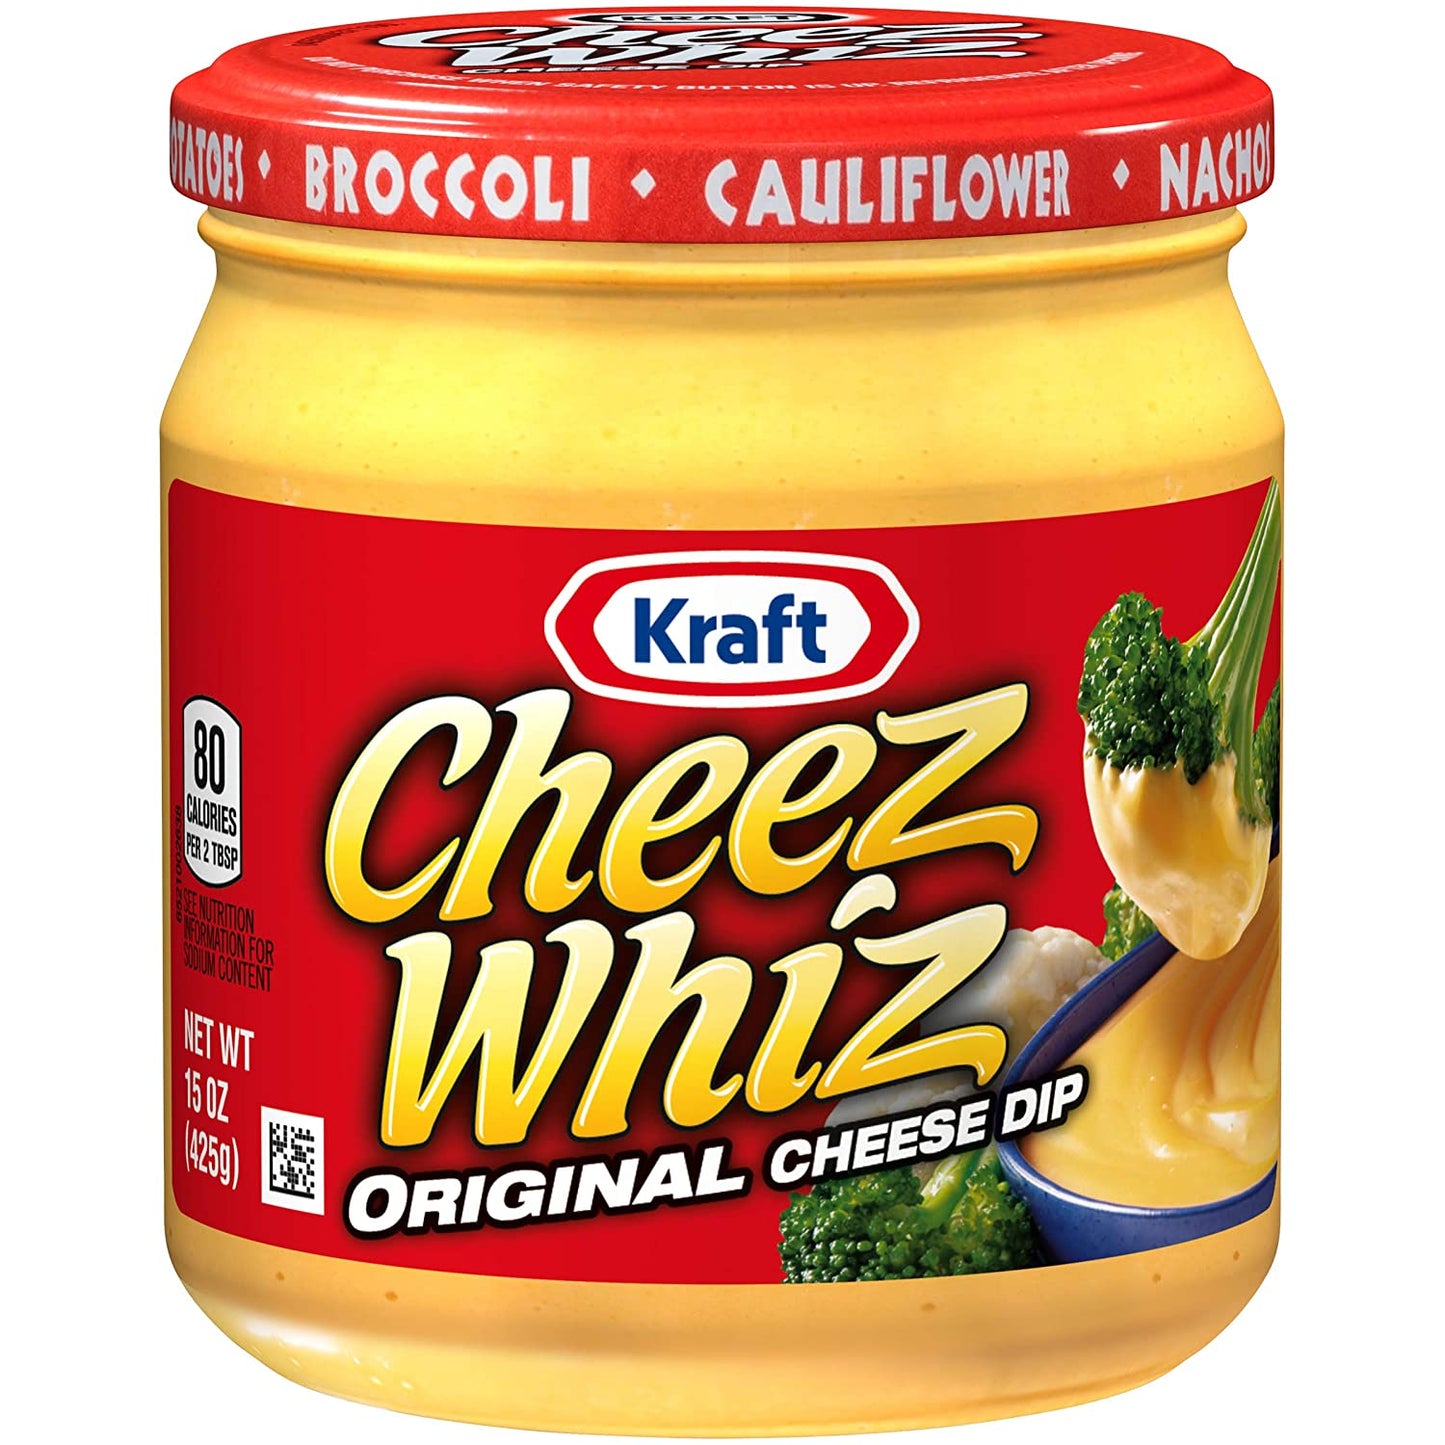 Cheez Whiz Original Plain Cheese Dip (15 oz Jar)